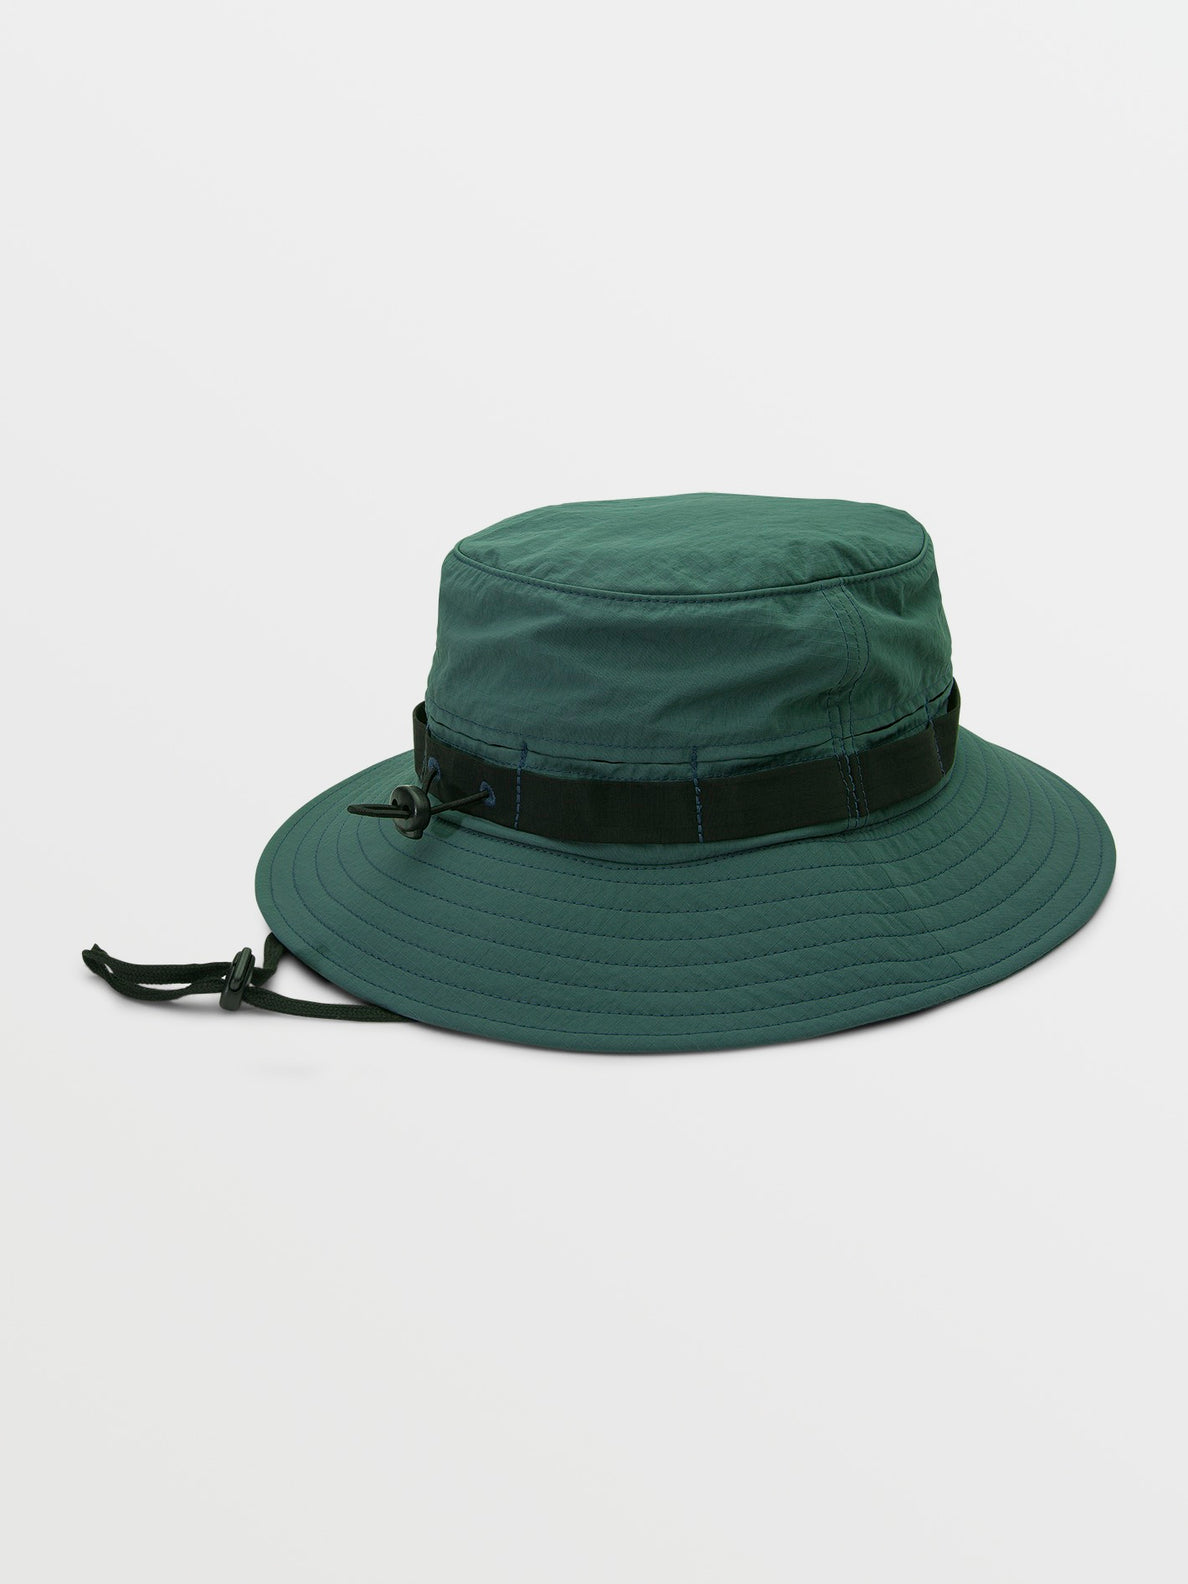 Ventilator Boonie Hat - Ranger Green